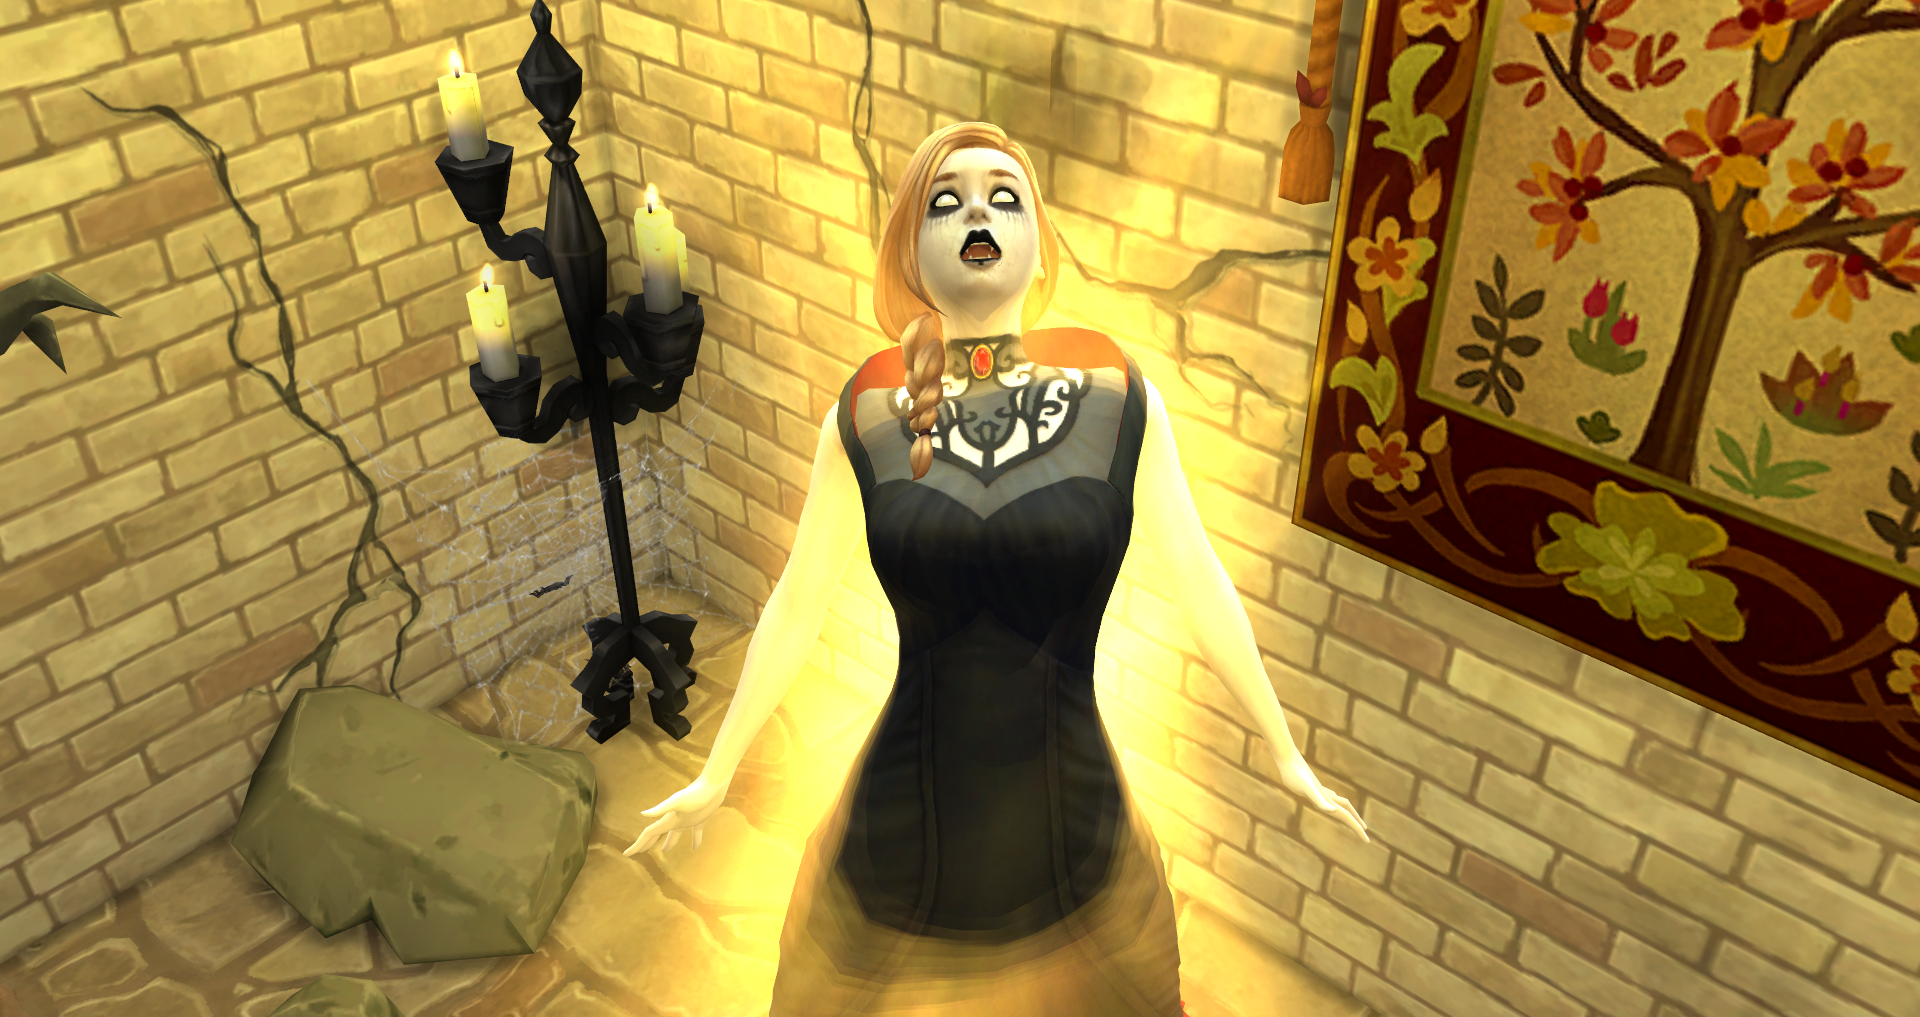 The Sims 4 Vampire Cheats: Powers, Ranks, Skills and More!